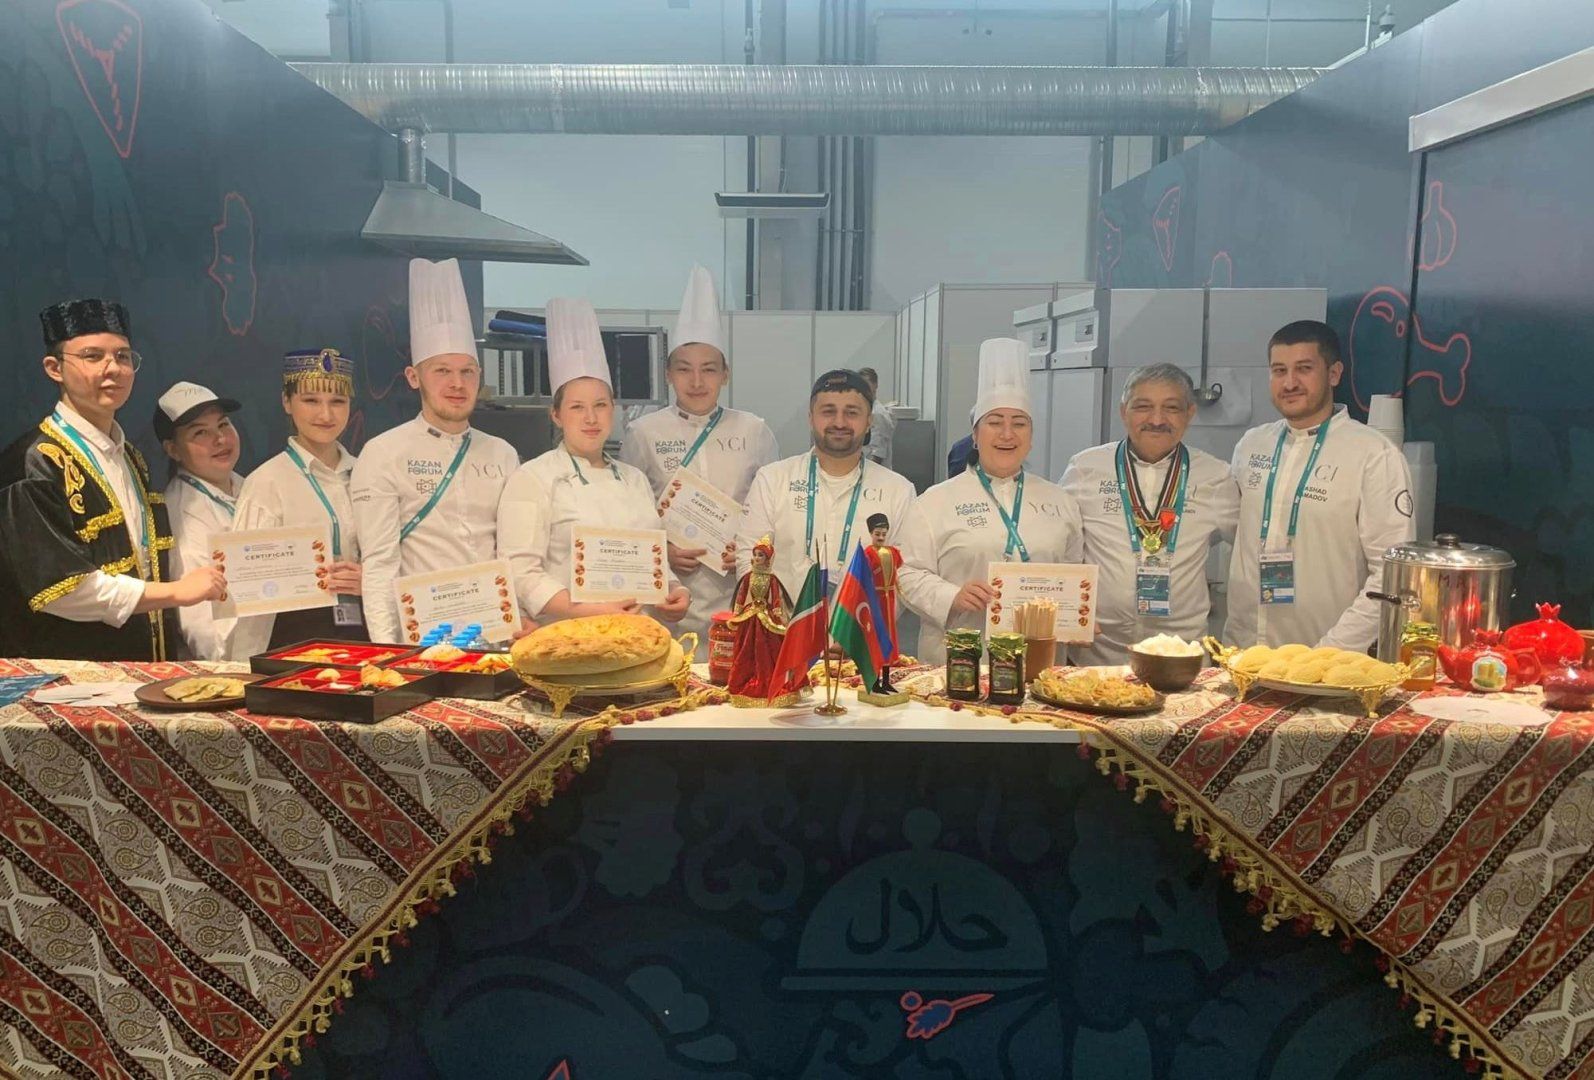 Azerbaijani chefs participate in halal cuisine tournament [PHOTOS]